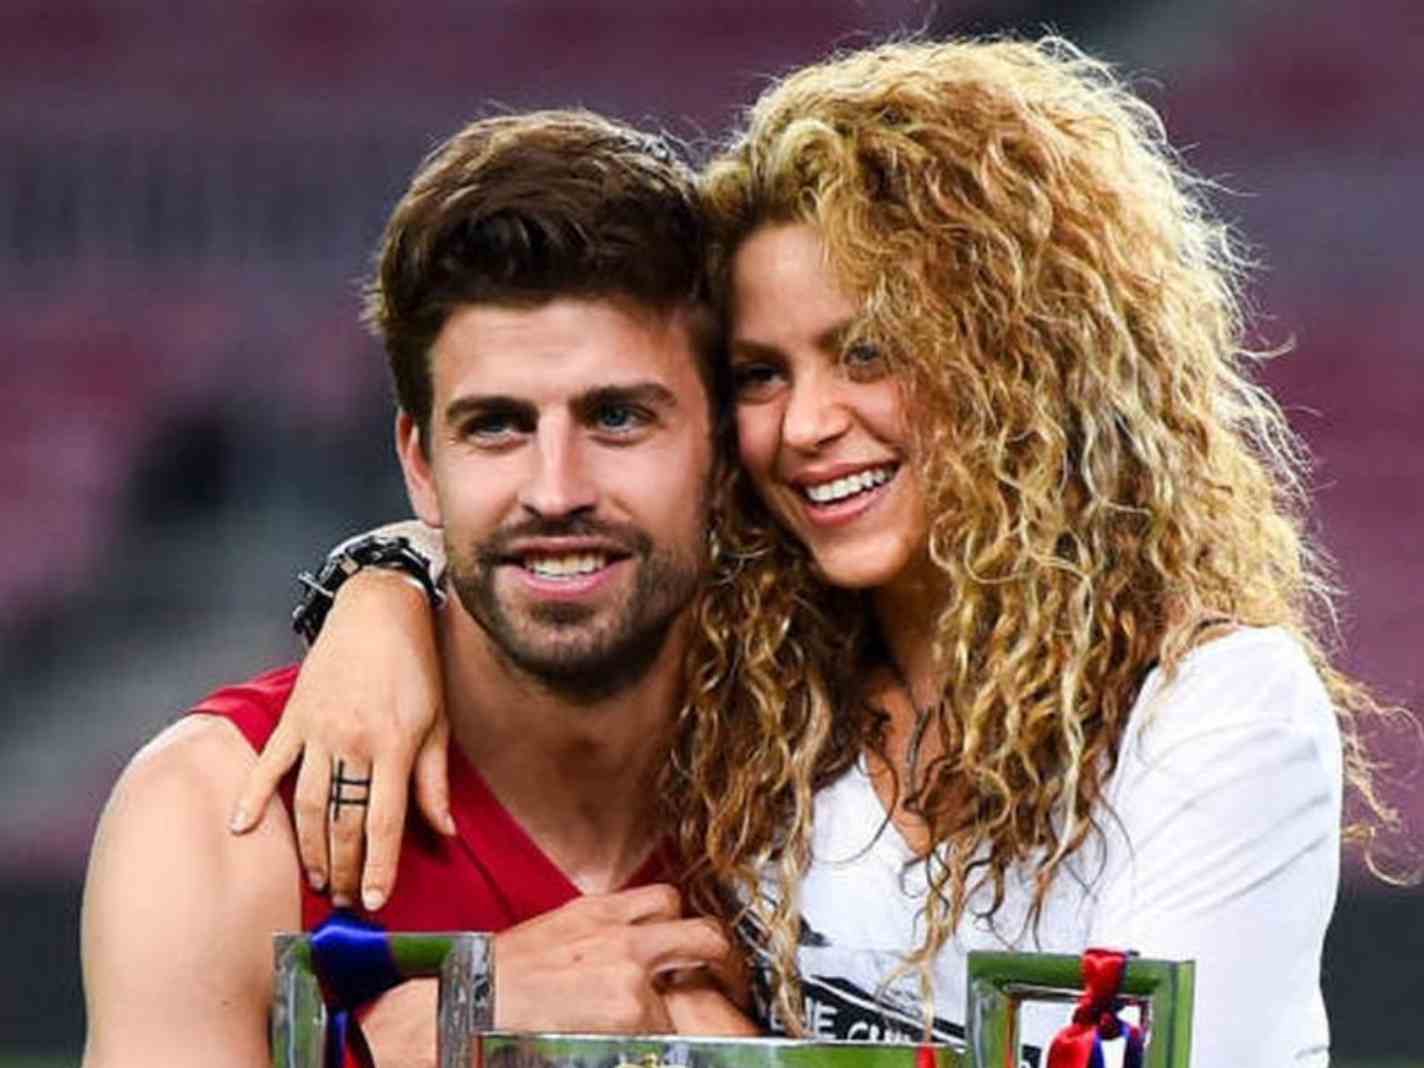 Barca defender Gerard Pique shocks Twitter by cheating on Shakira